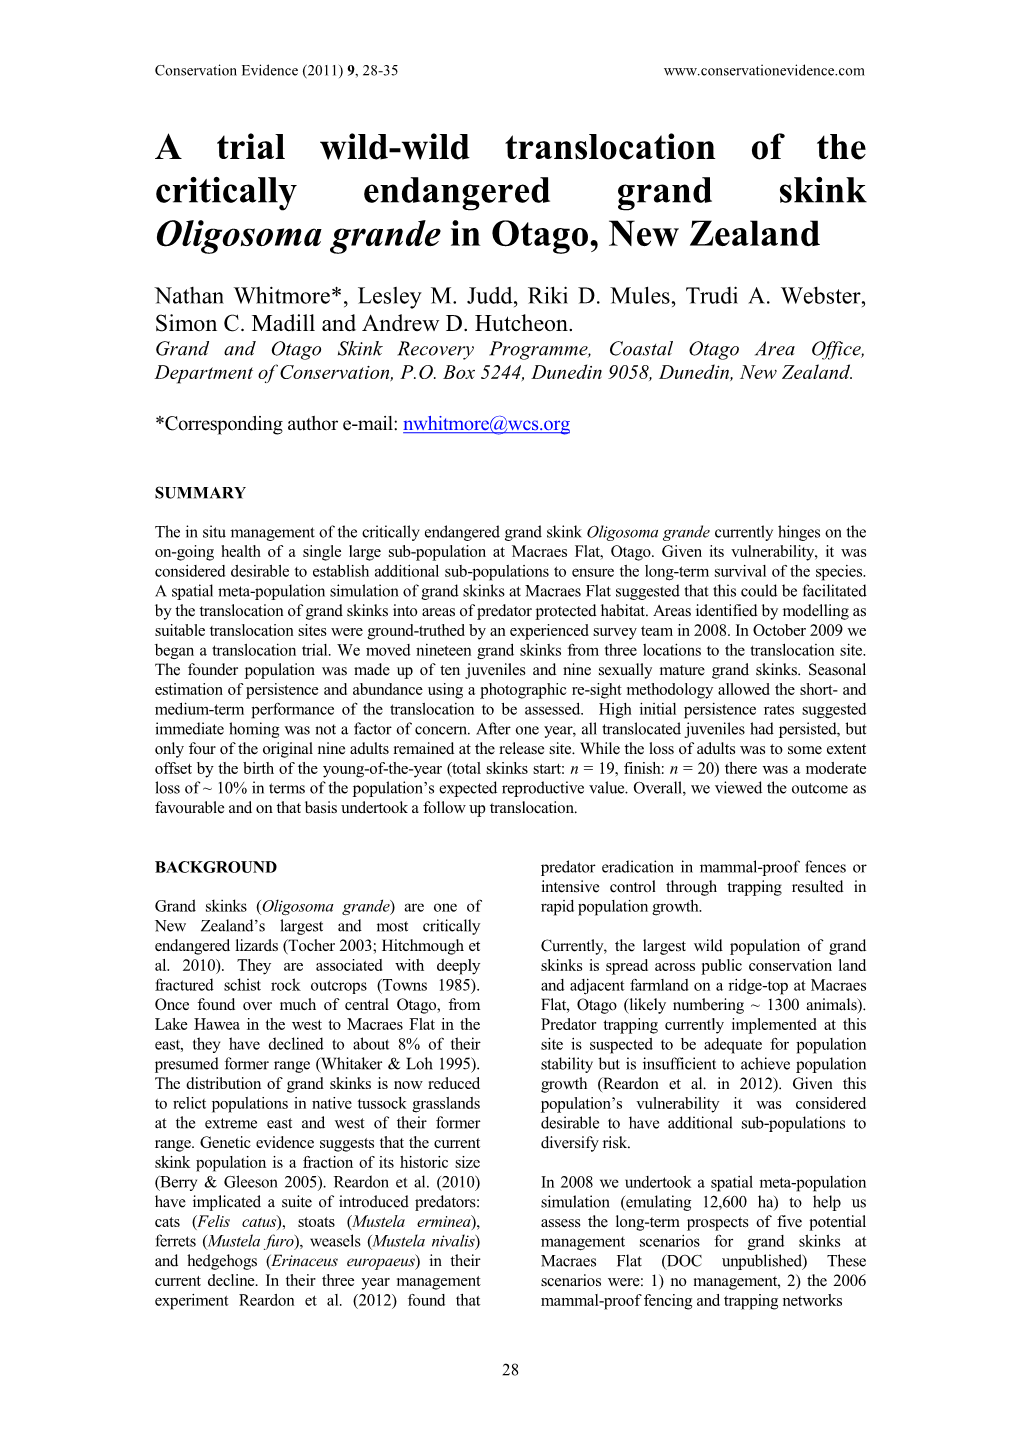 A Trial Wild-Wild Translocation of the Critically Endangered Grand Skink Oligosoma Grande in Otago, New Zealand